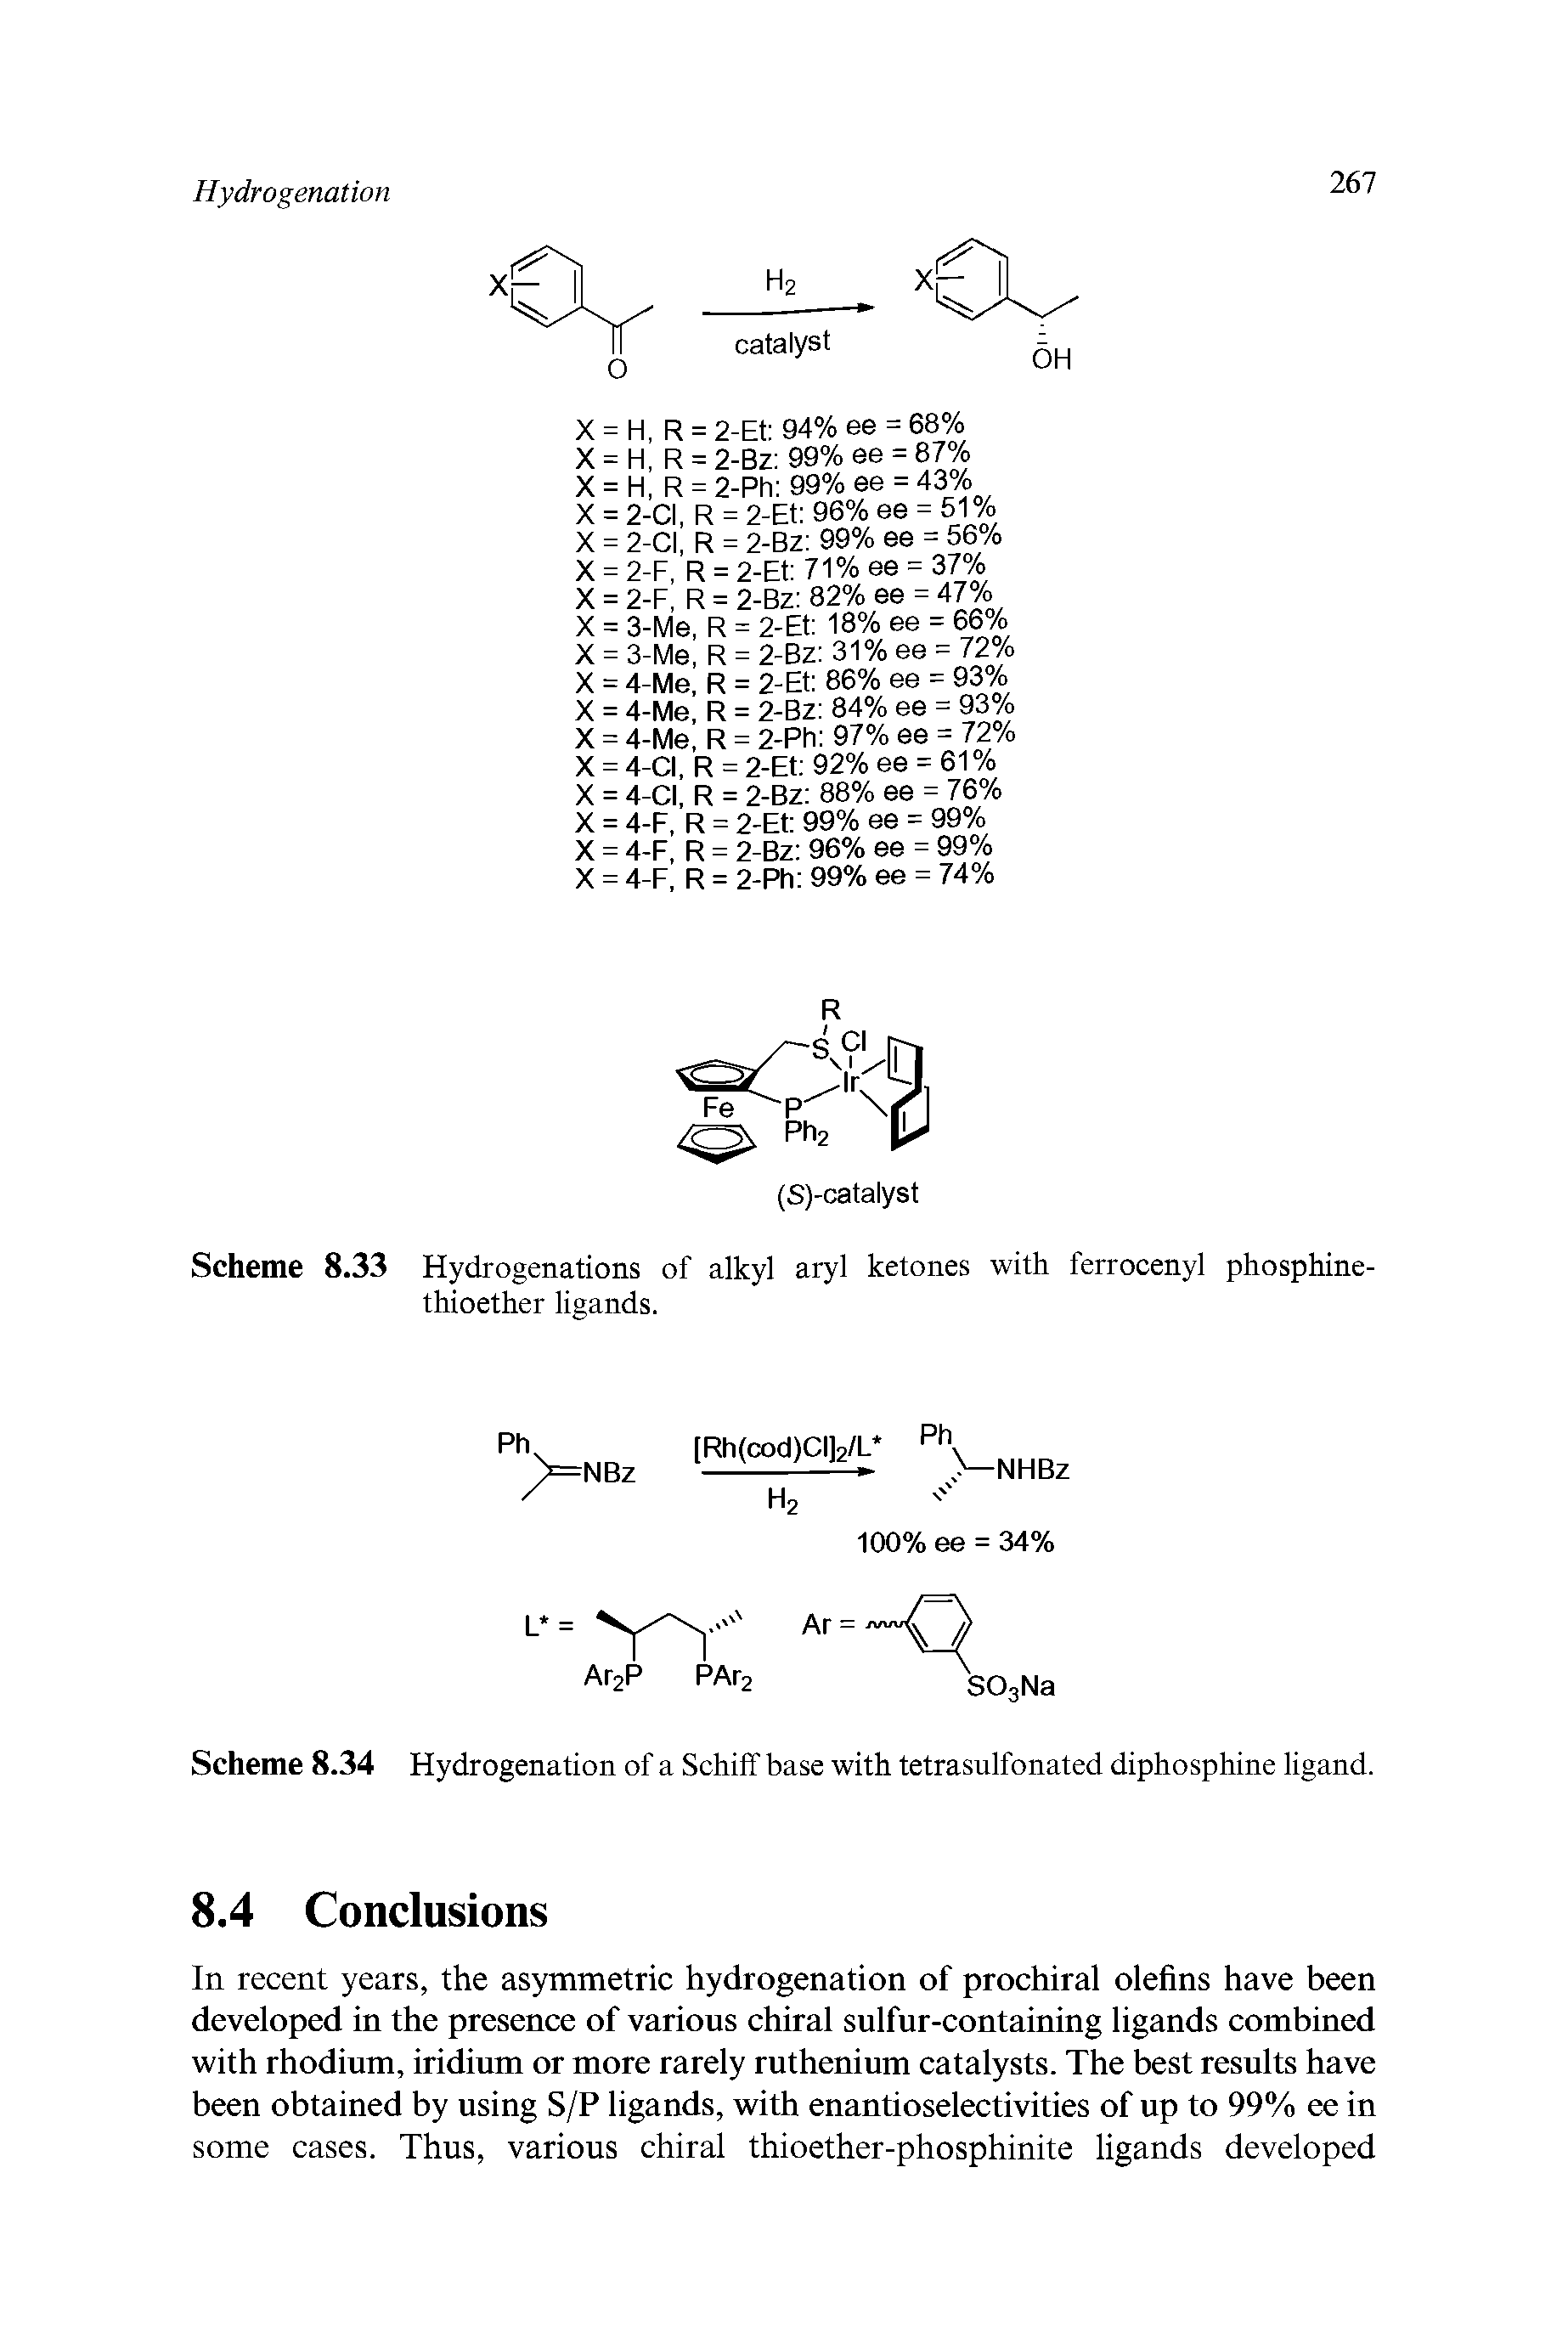 Scheme 8.33 Hydrogenations of alkyl aryl ketones with ferrocenyl phosphine-thioether ligands.